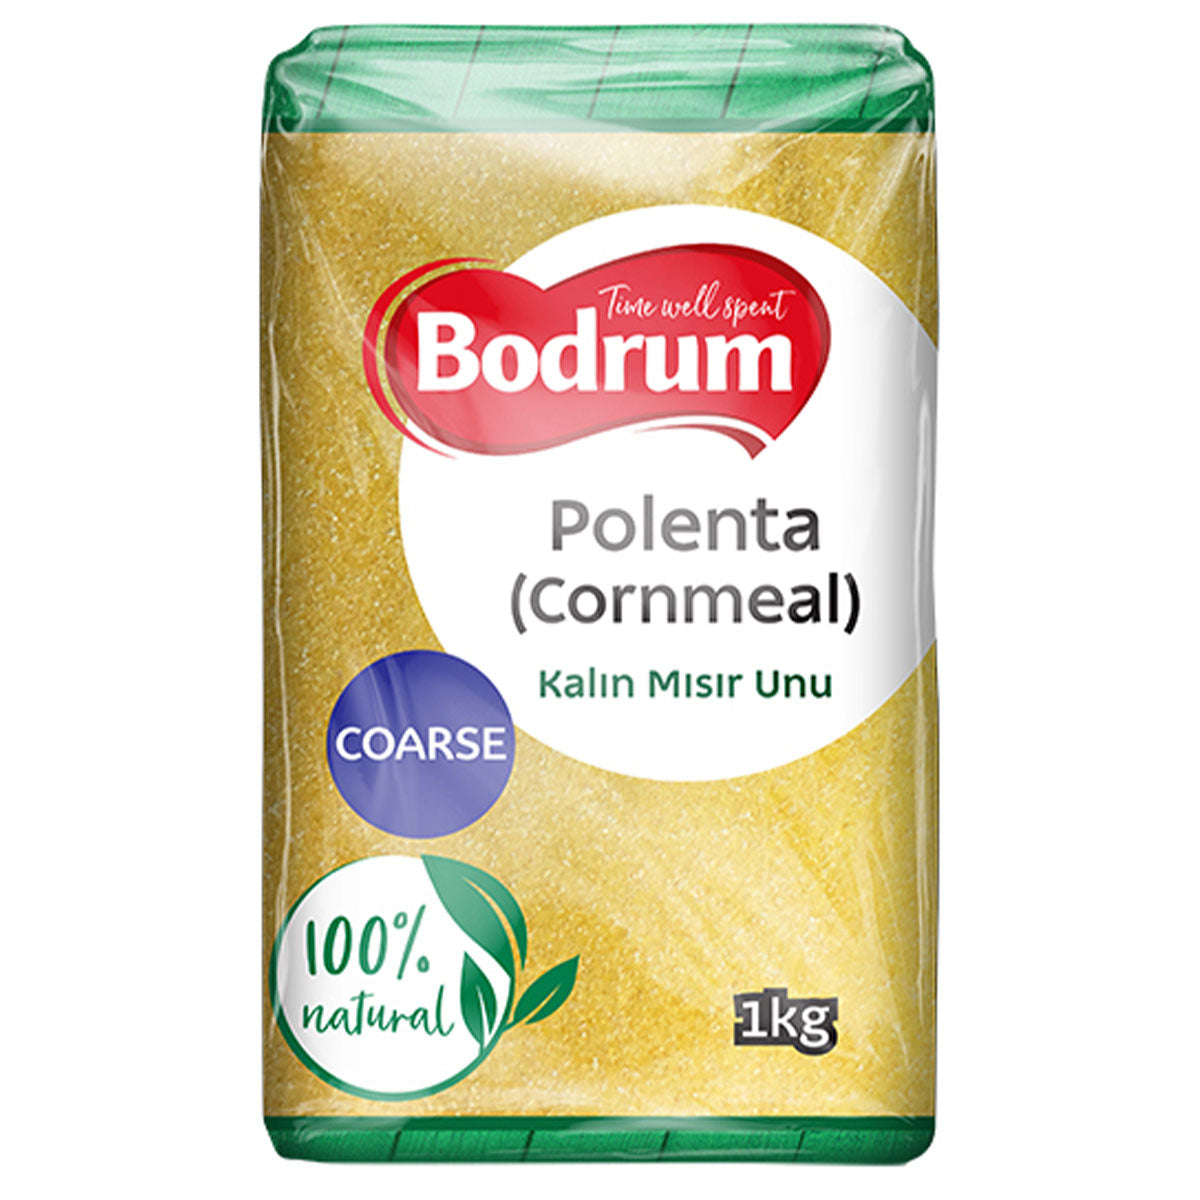 Bodrum - Coarse Polenta Bramata - 1kg - Continental Food Store